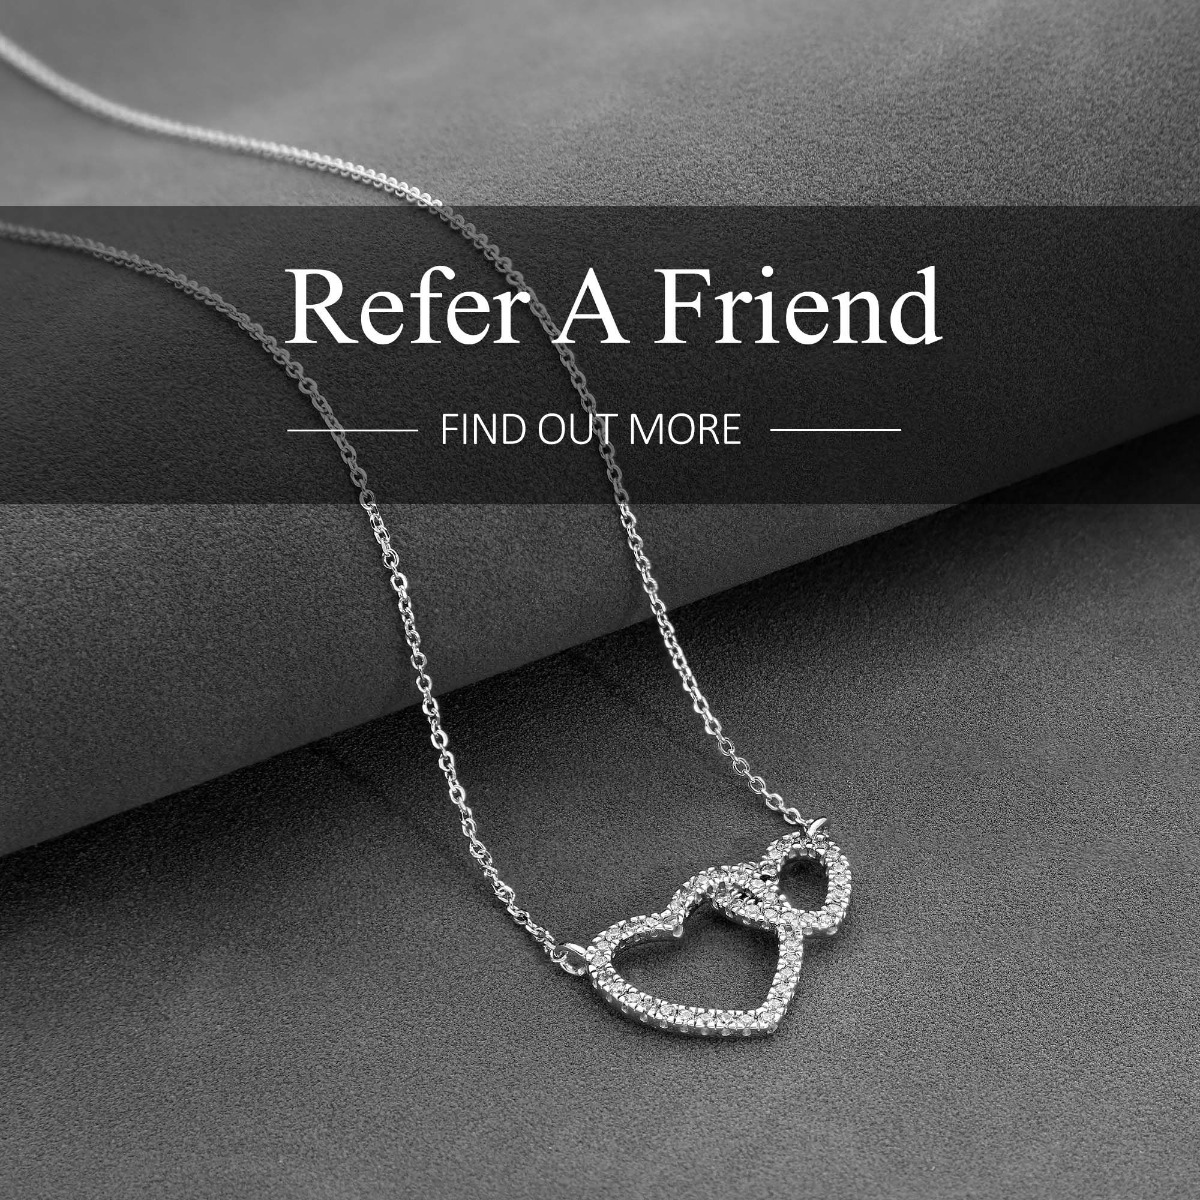 Refer_a_friend